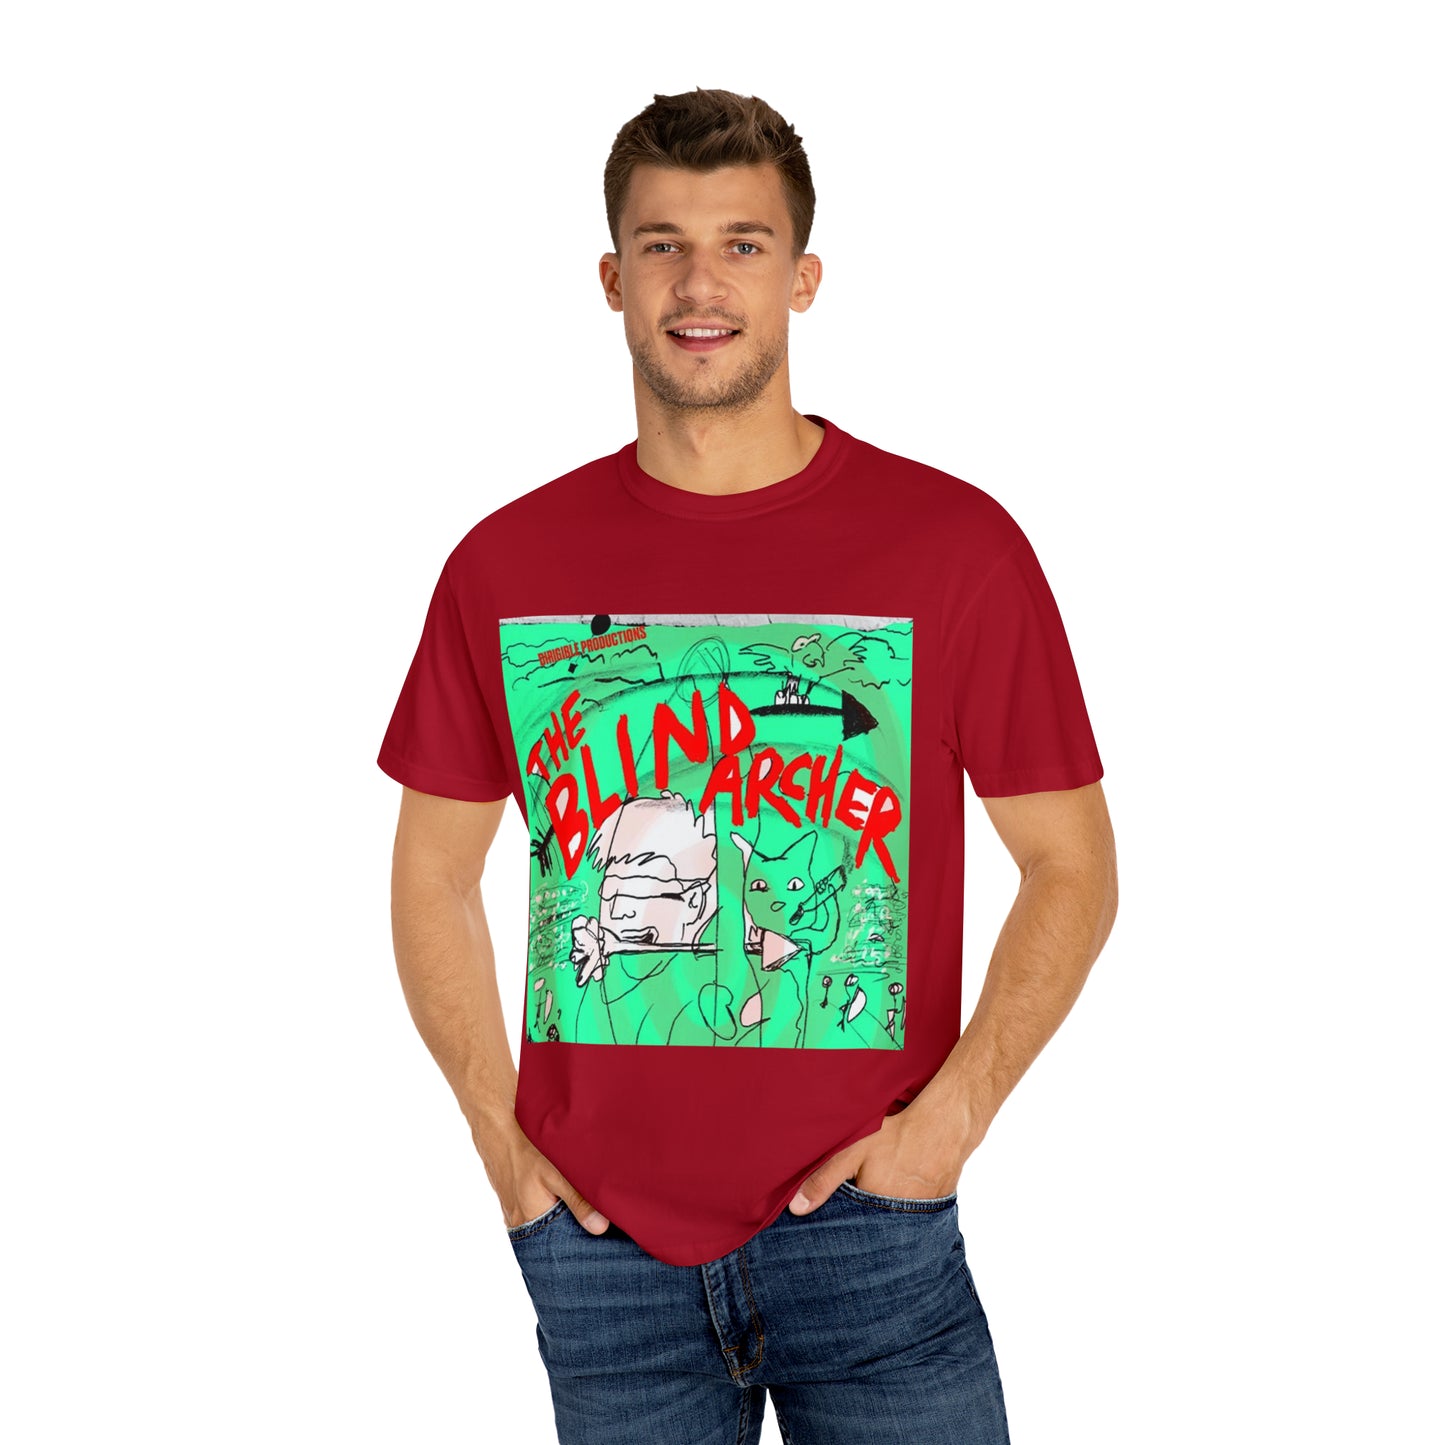 Blind Archer Unisex T-shirt - Variation 1